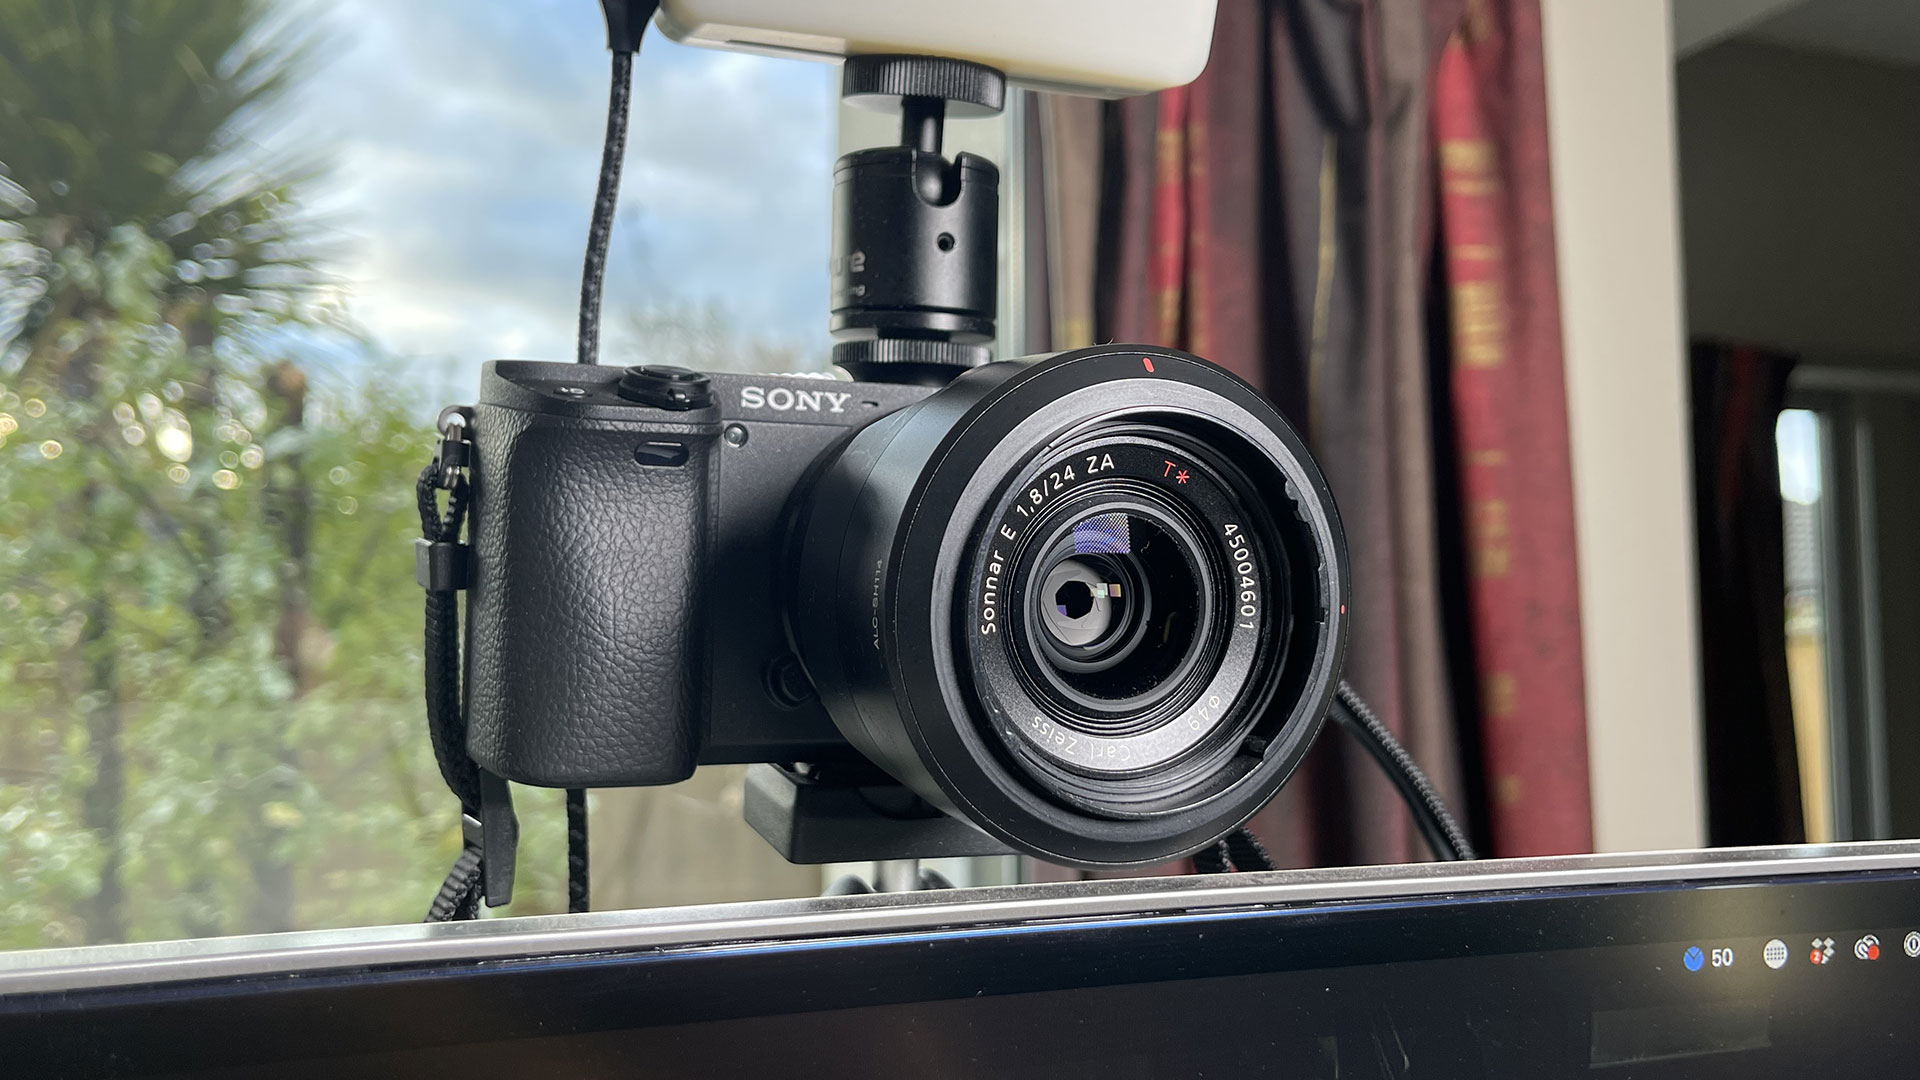 Sony A6400 24mm F18 Lens Carl Zeiss Sonnarnbsp› Entrepreneur Decision Maker Connector Podcaster Educator